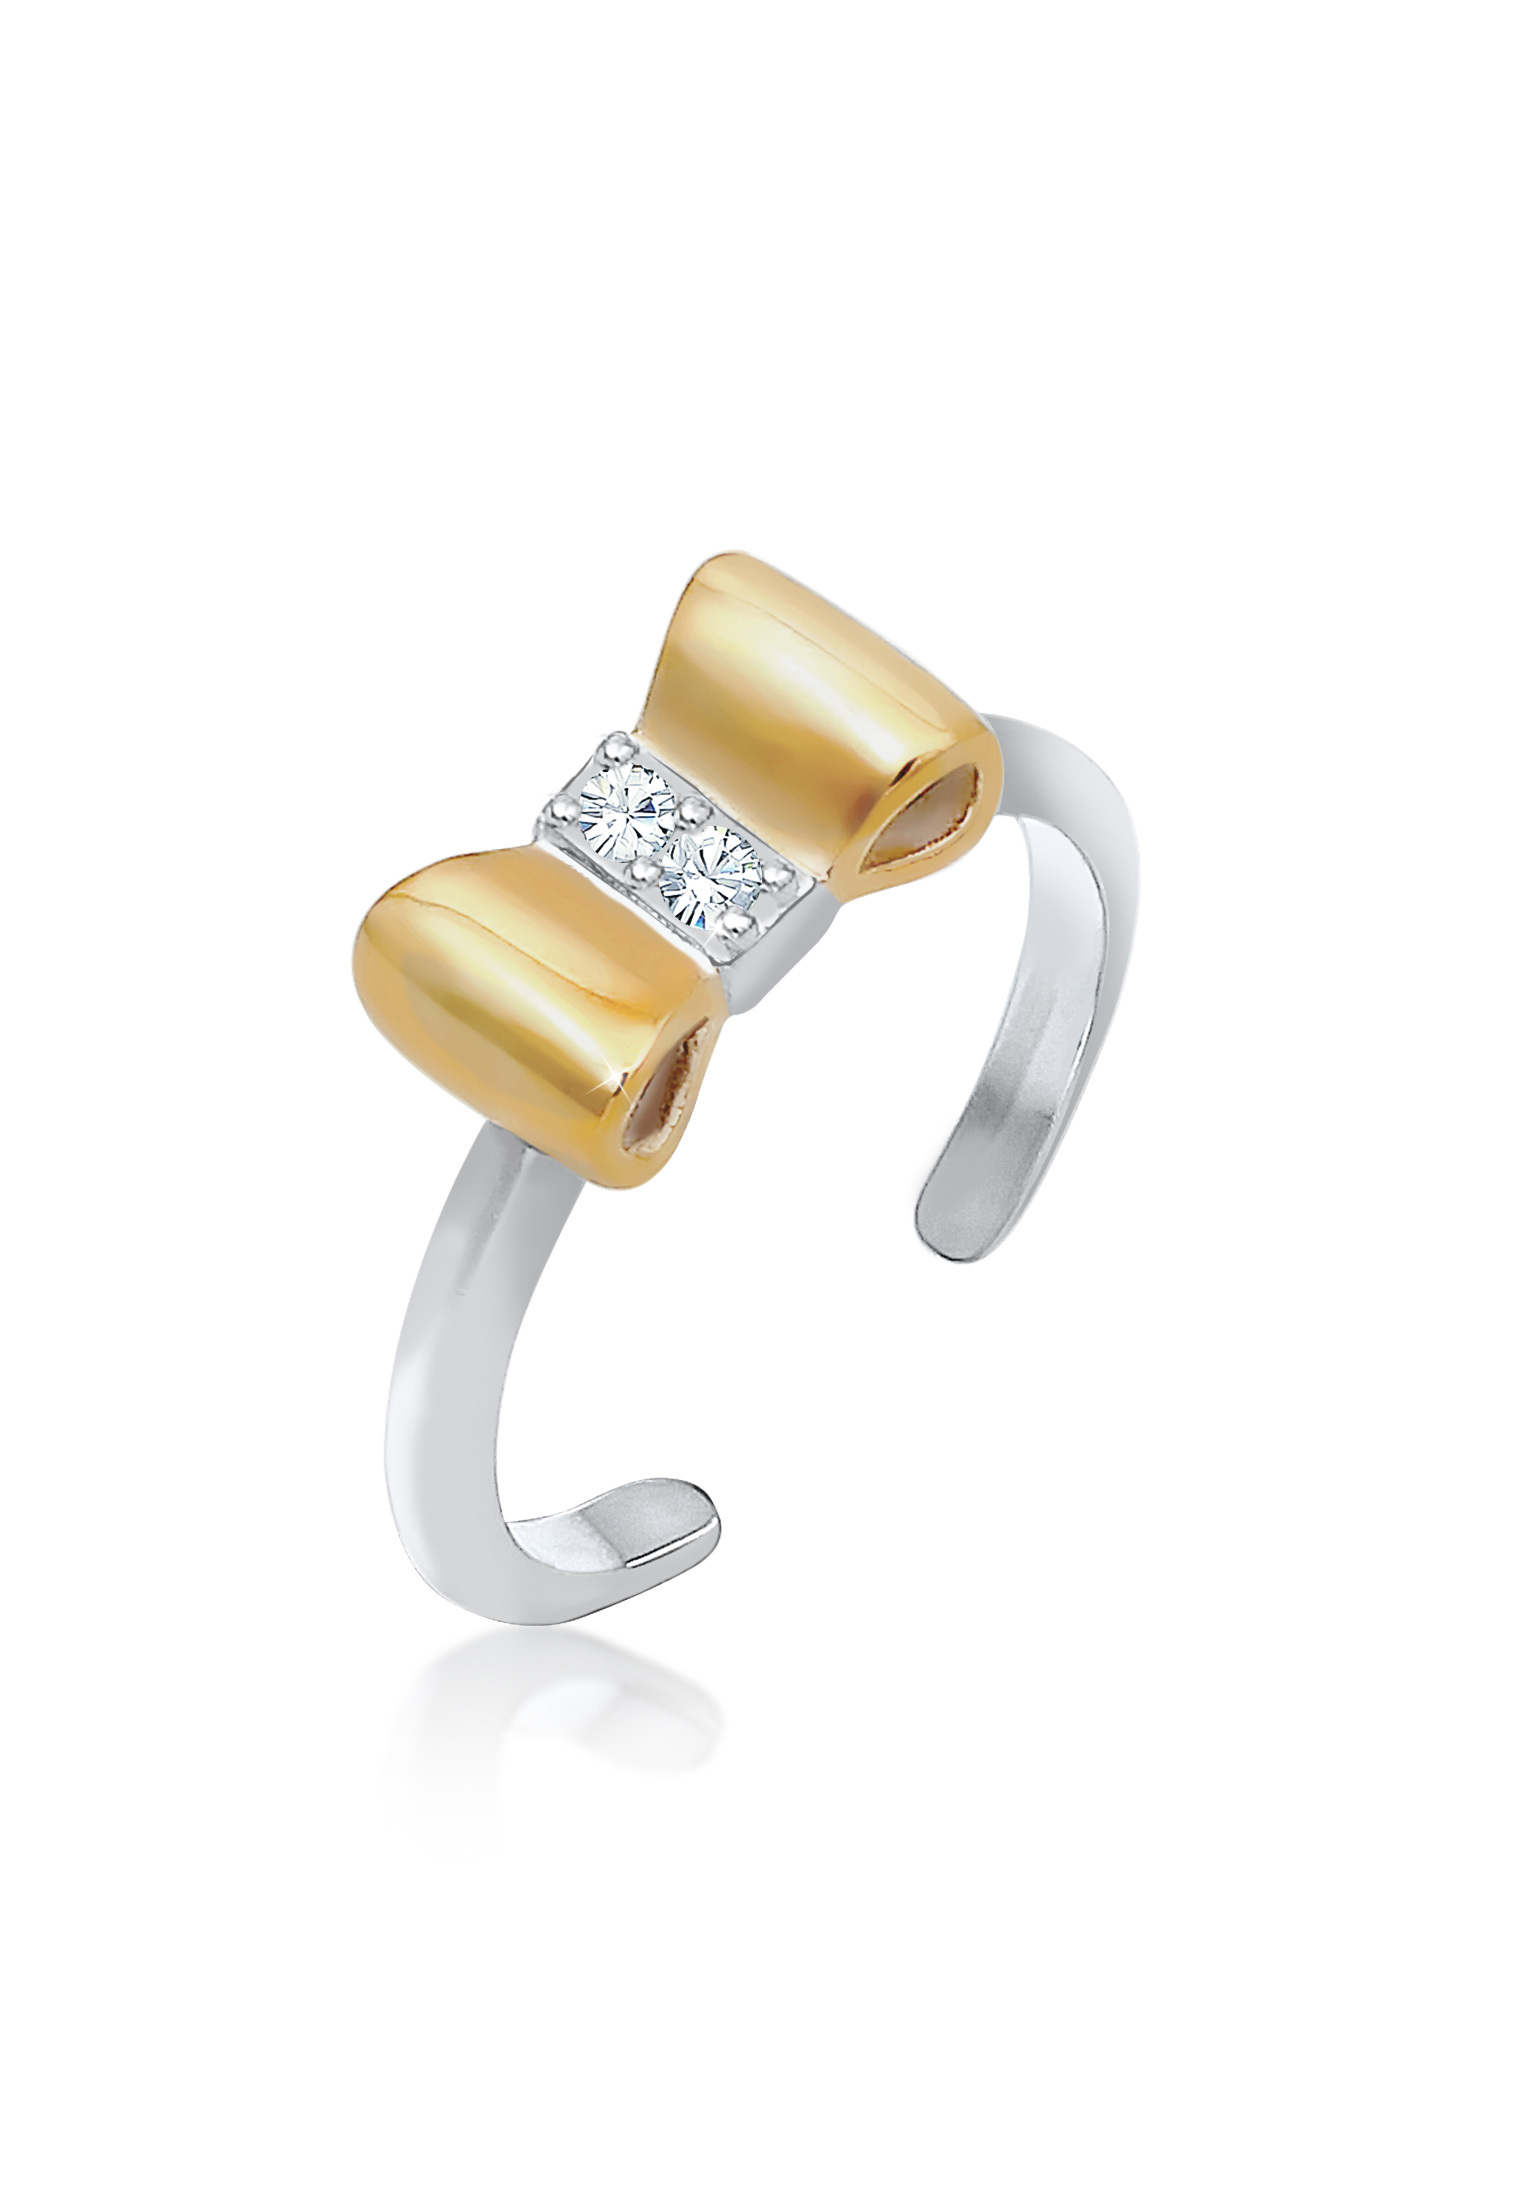 Ring Schleife | Kristall ( Weiß ) | 925 Sterling Silber vergoldet